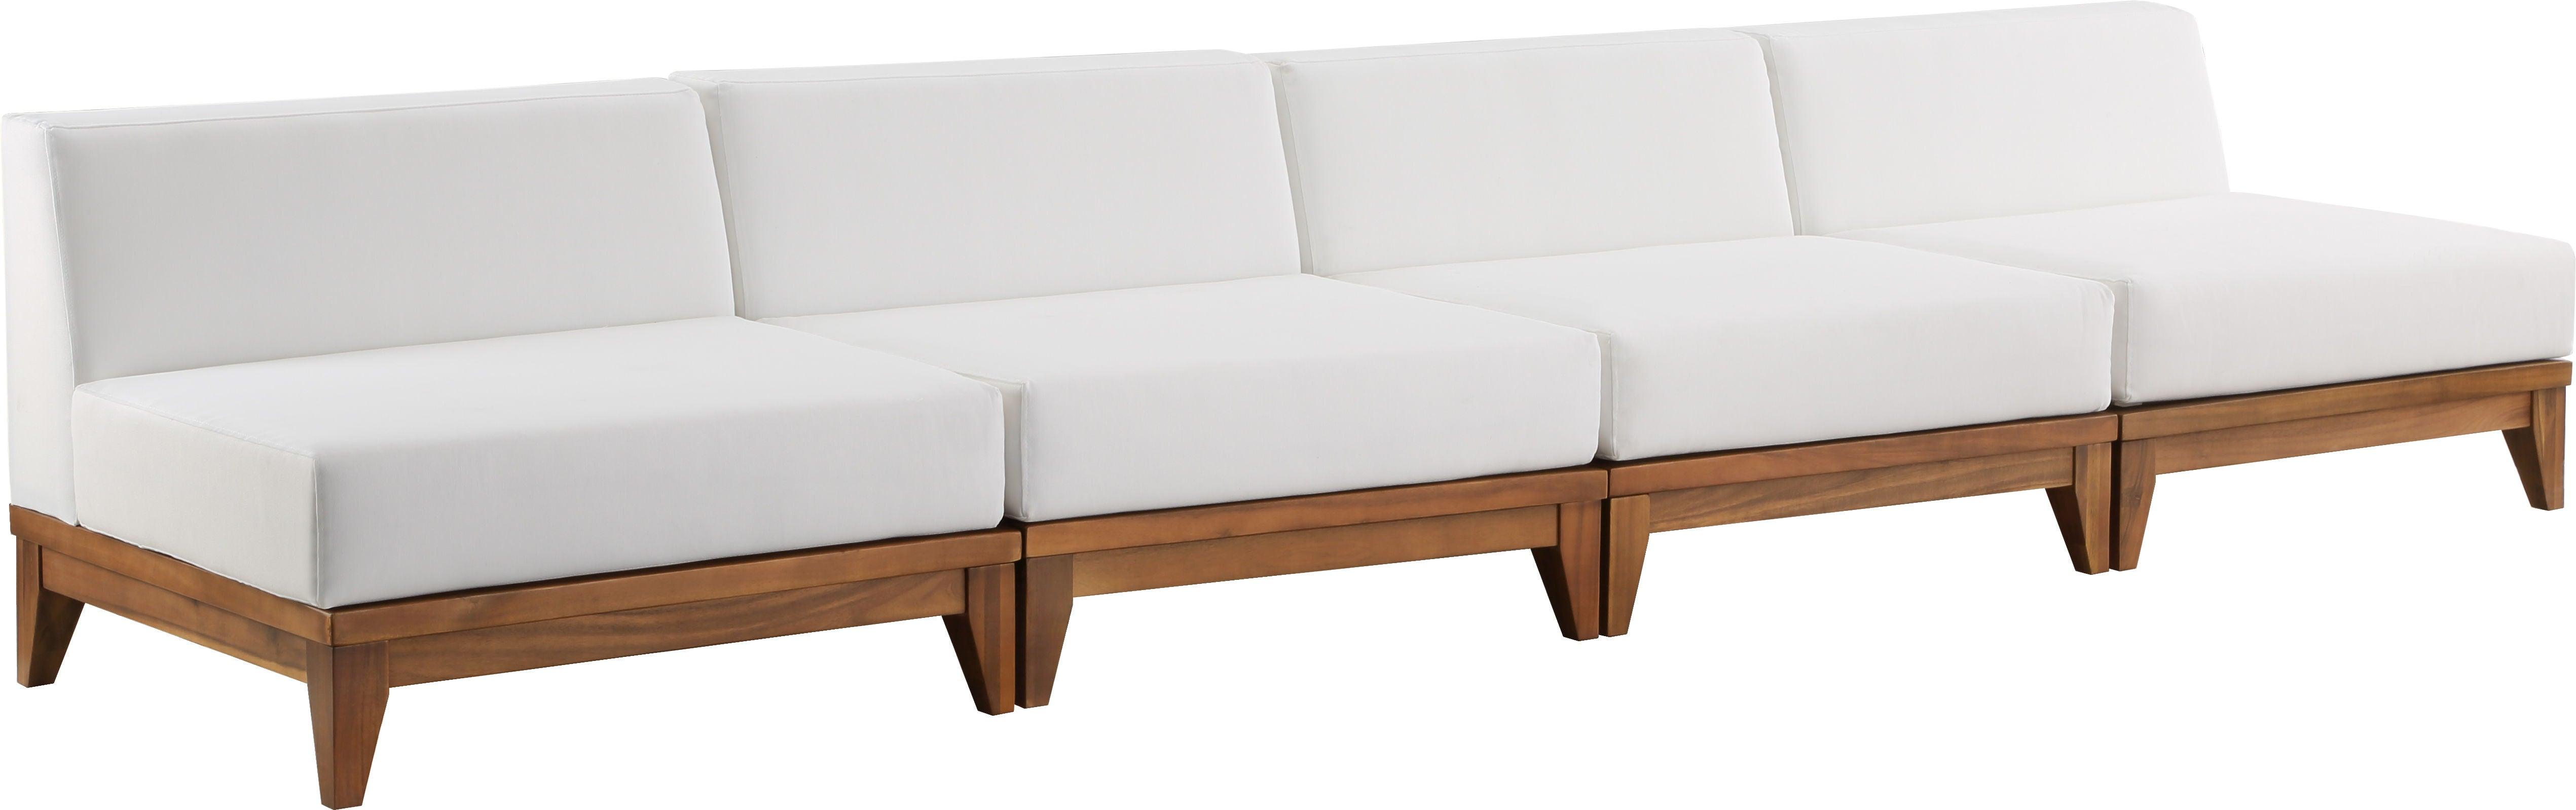 Meridian Furniture - Rio - Modular Sofa 4 Seats - Off White - Fabric - Modern & Contemporary - 5th Avenue Furniture